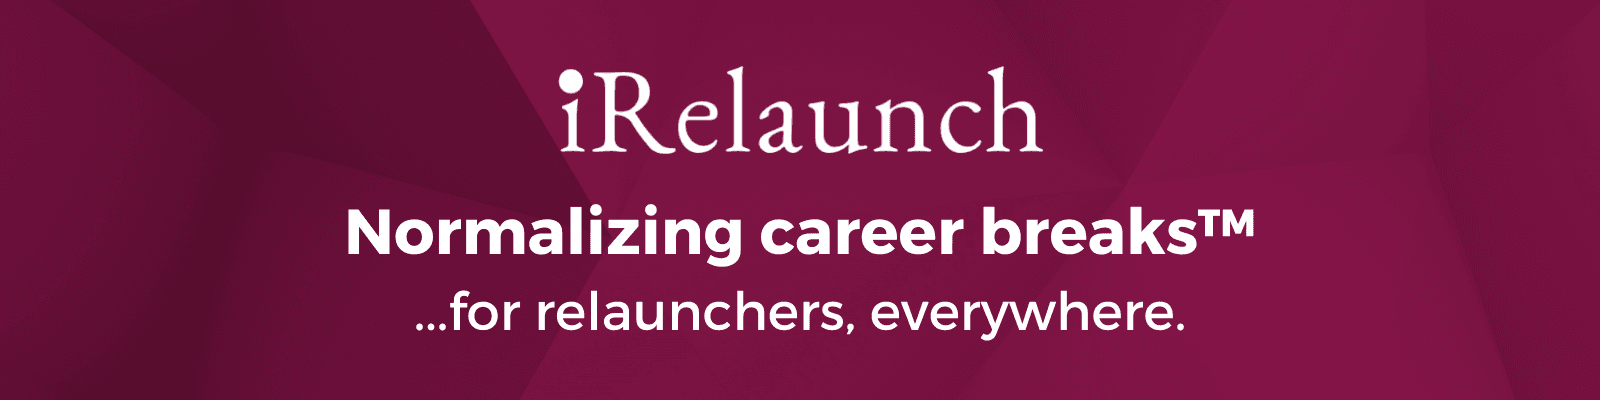 iRelaunch Normalizing Career Breaks™..for relaunchers, everywhere.